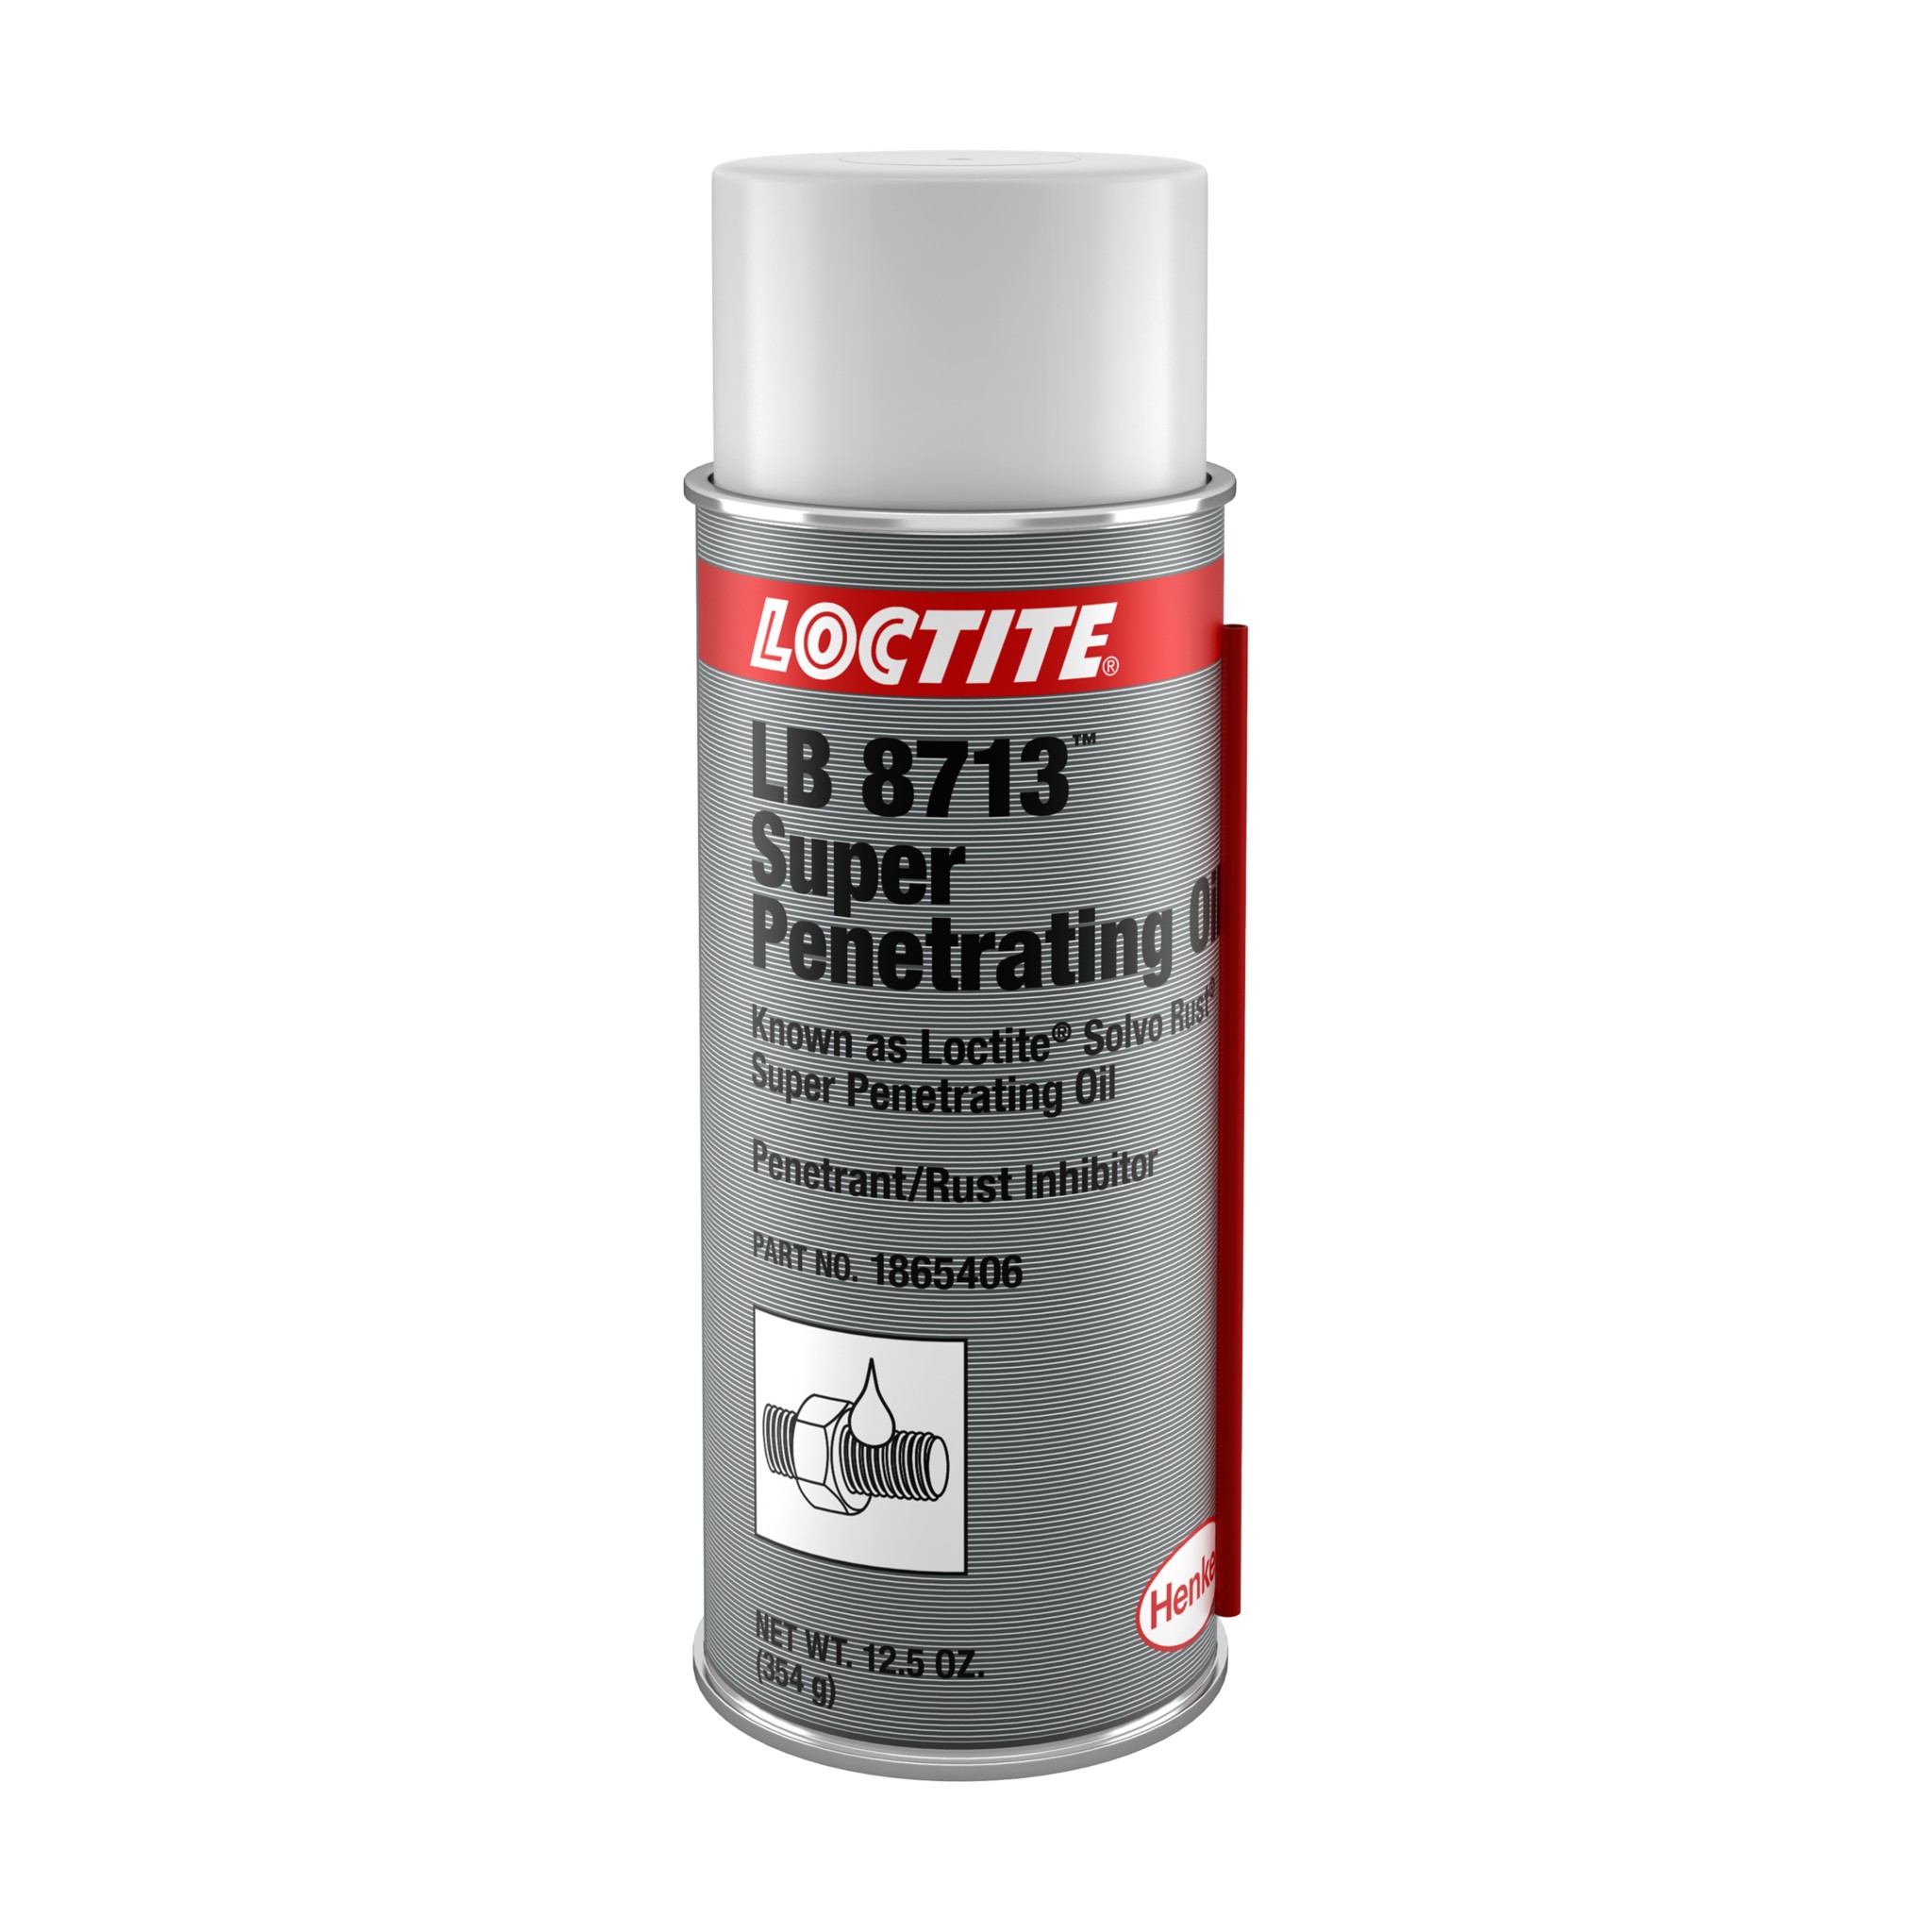 Loctite Spray Adhesive - All Purpose - 11.00 oz Aerosol - Each 234933